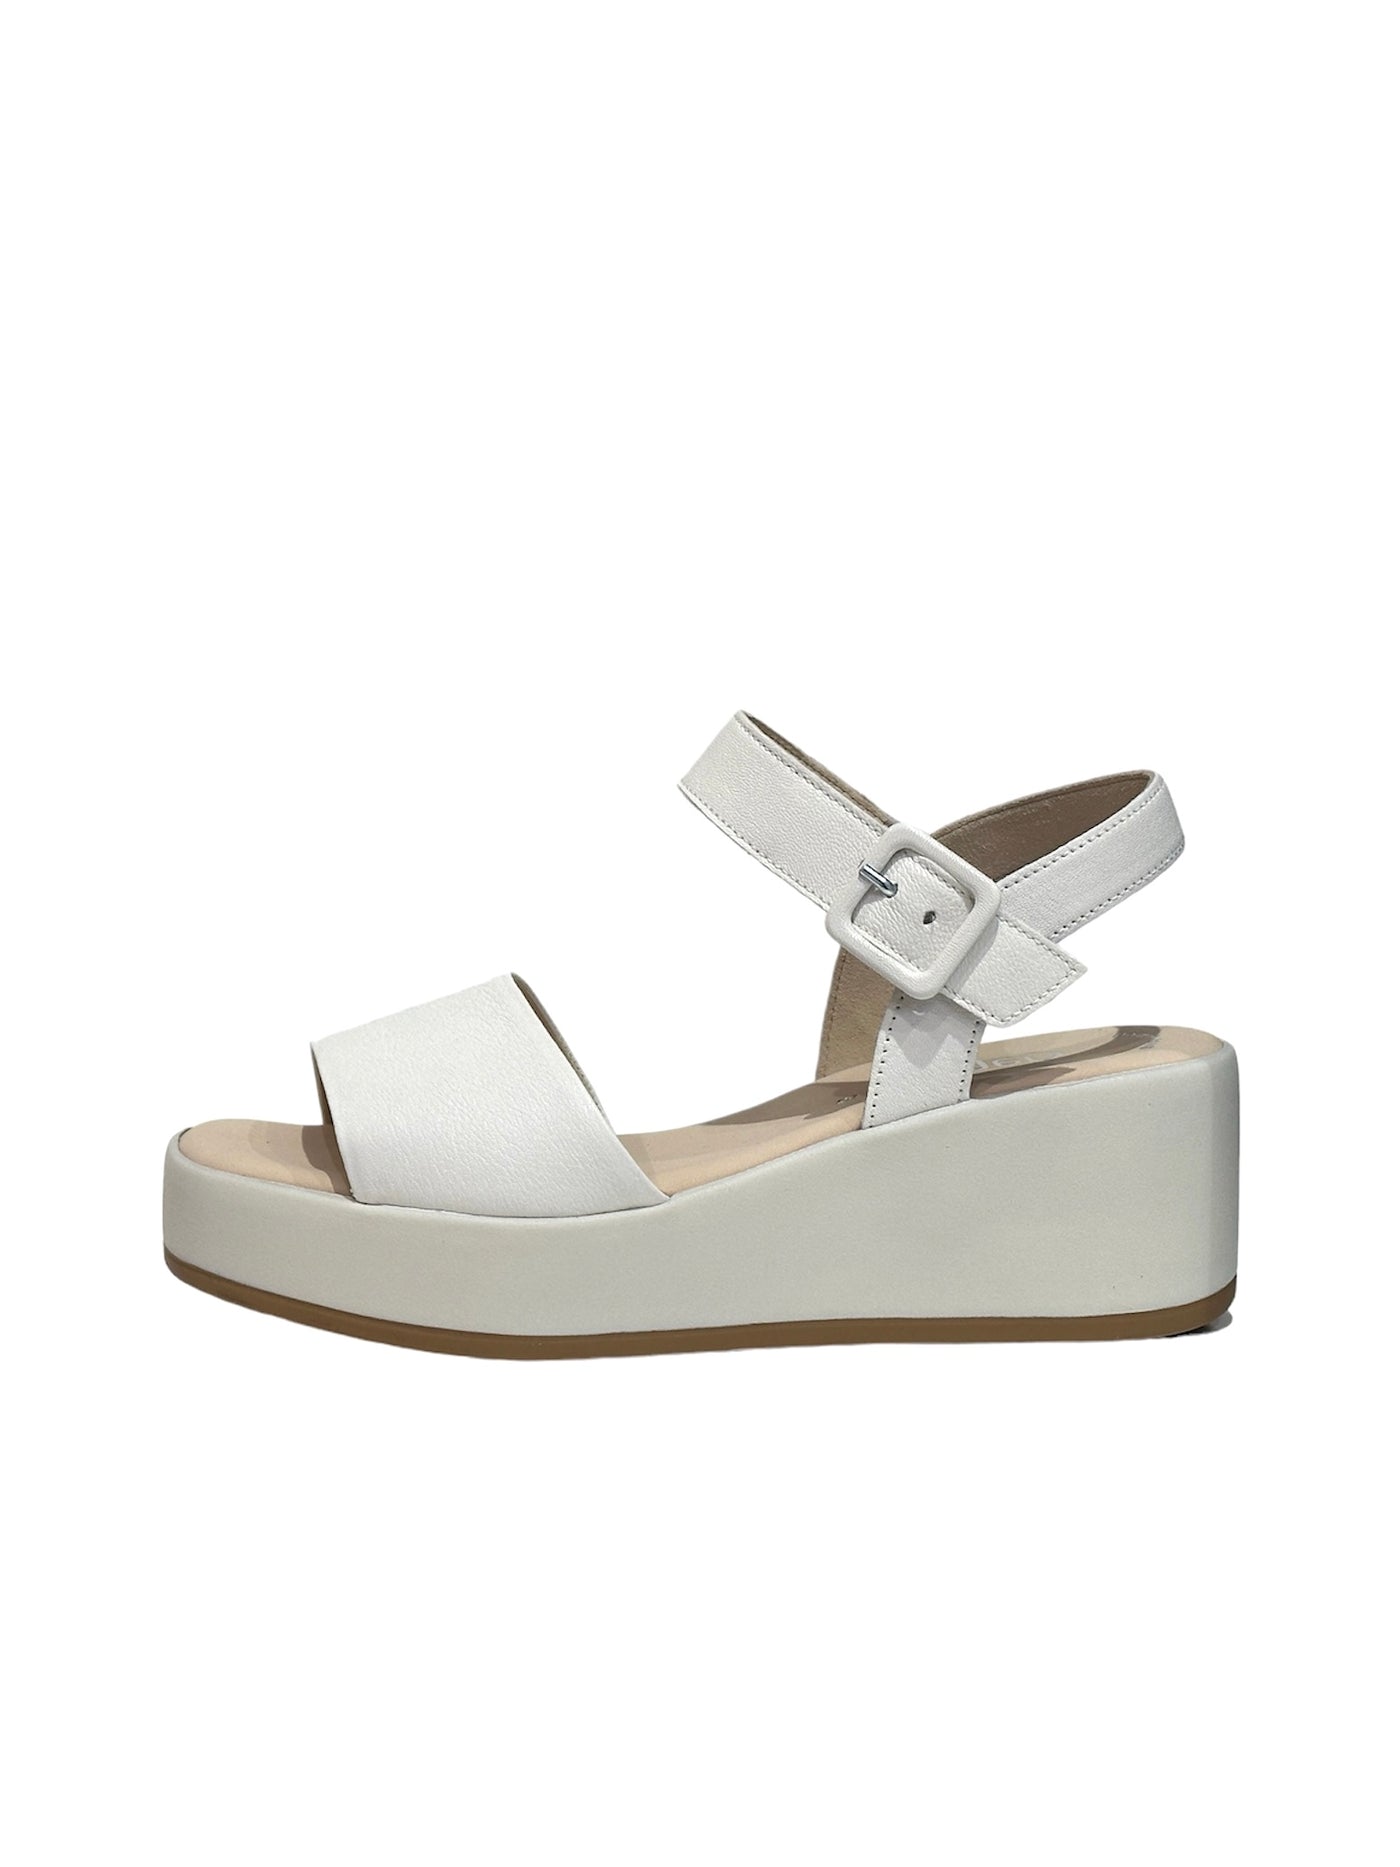 White Sandal with Wedge Heel & Buckle